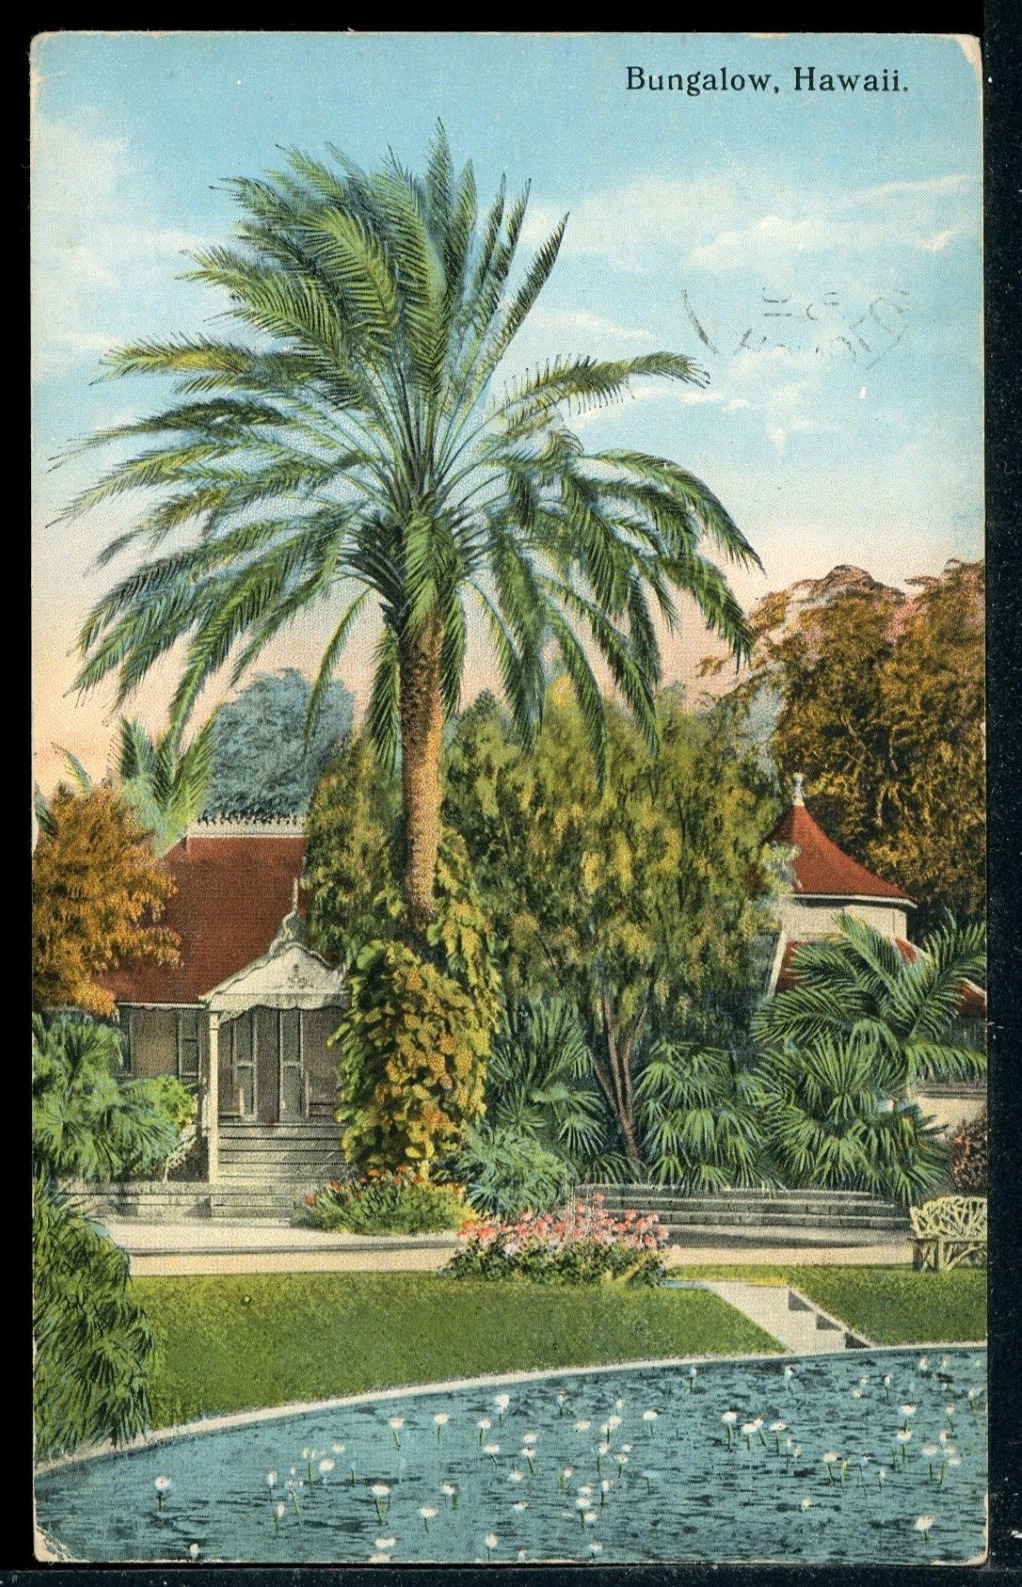 1919 Home Residence Bungalow Hawaii Vintage Postcard South Seas M1429a